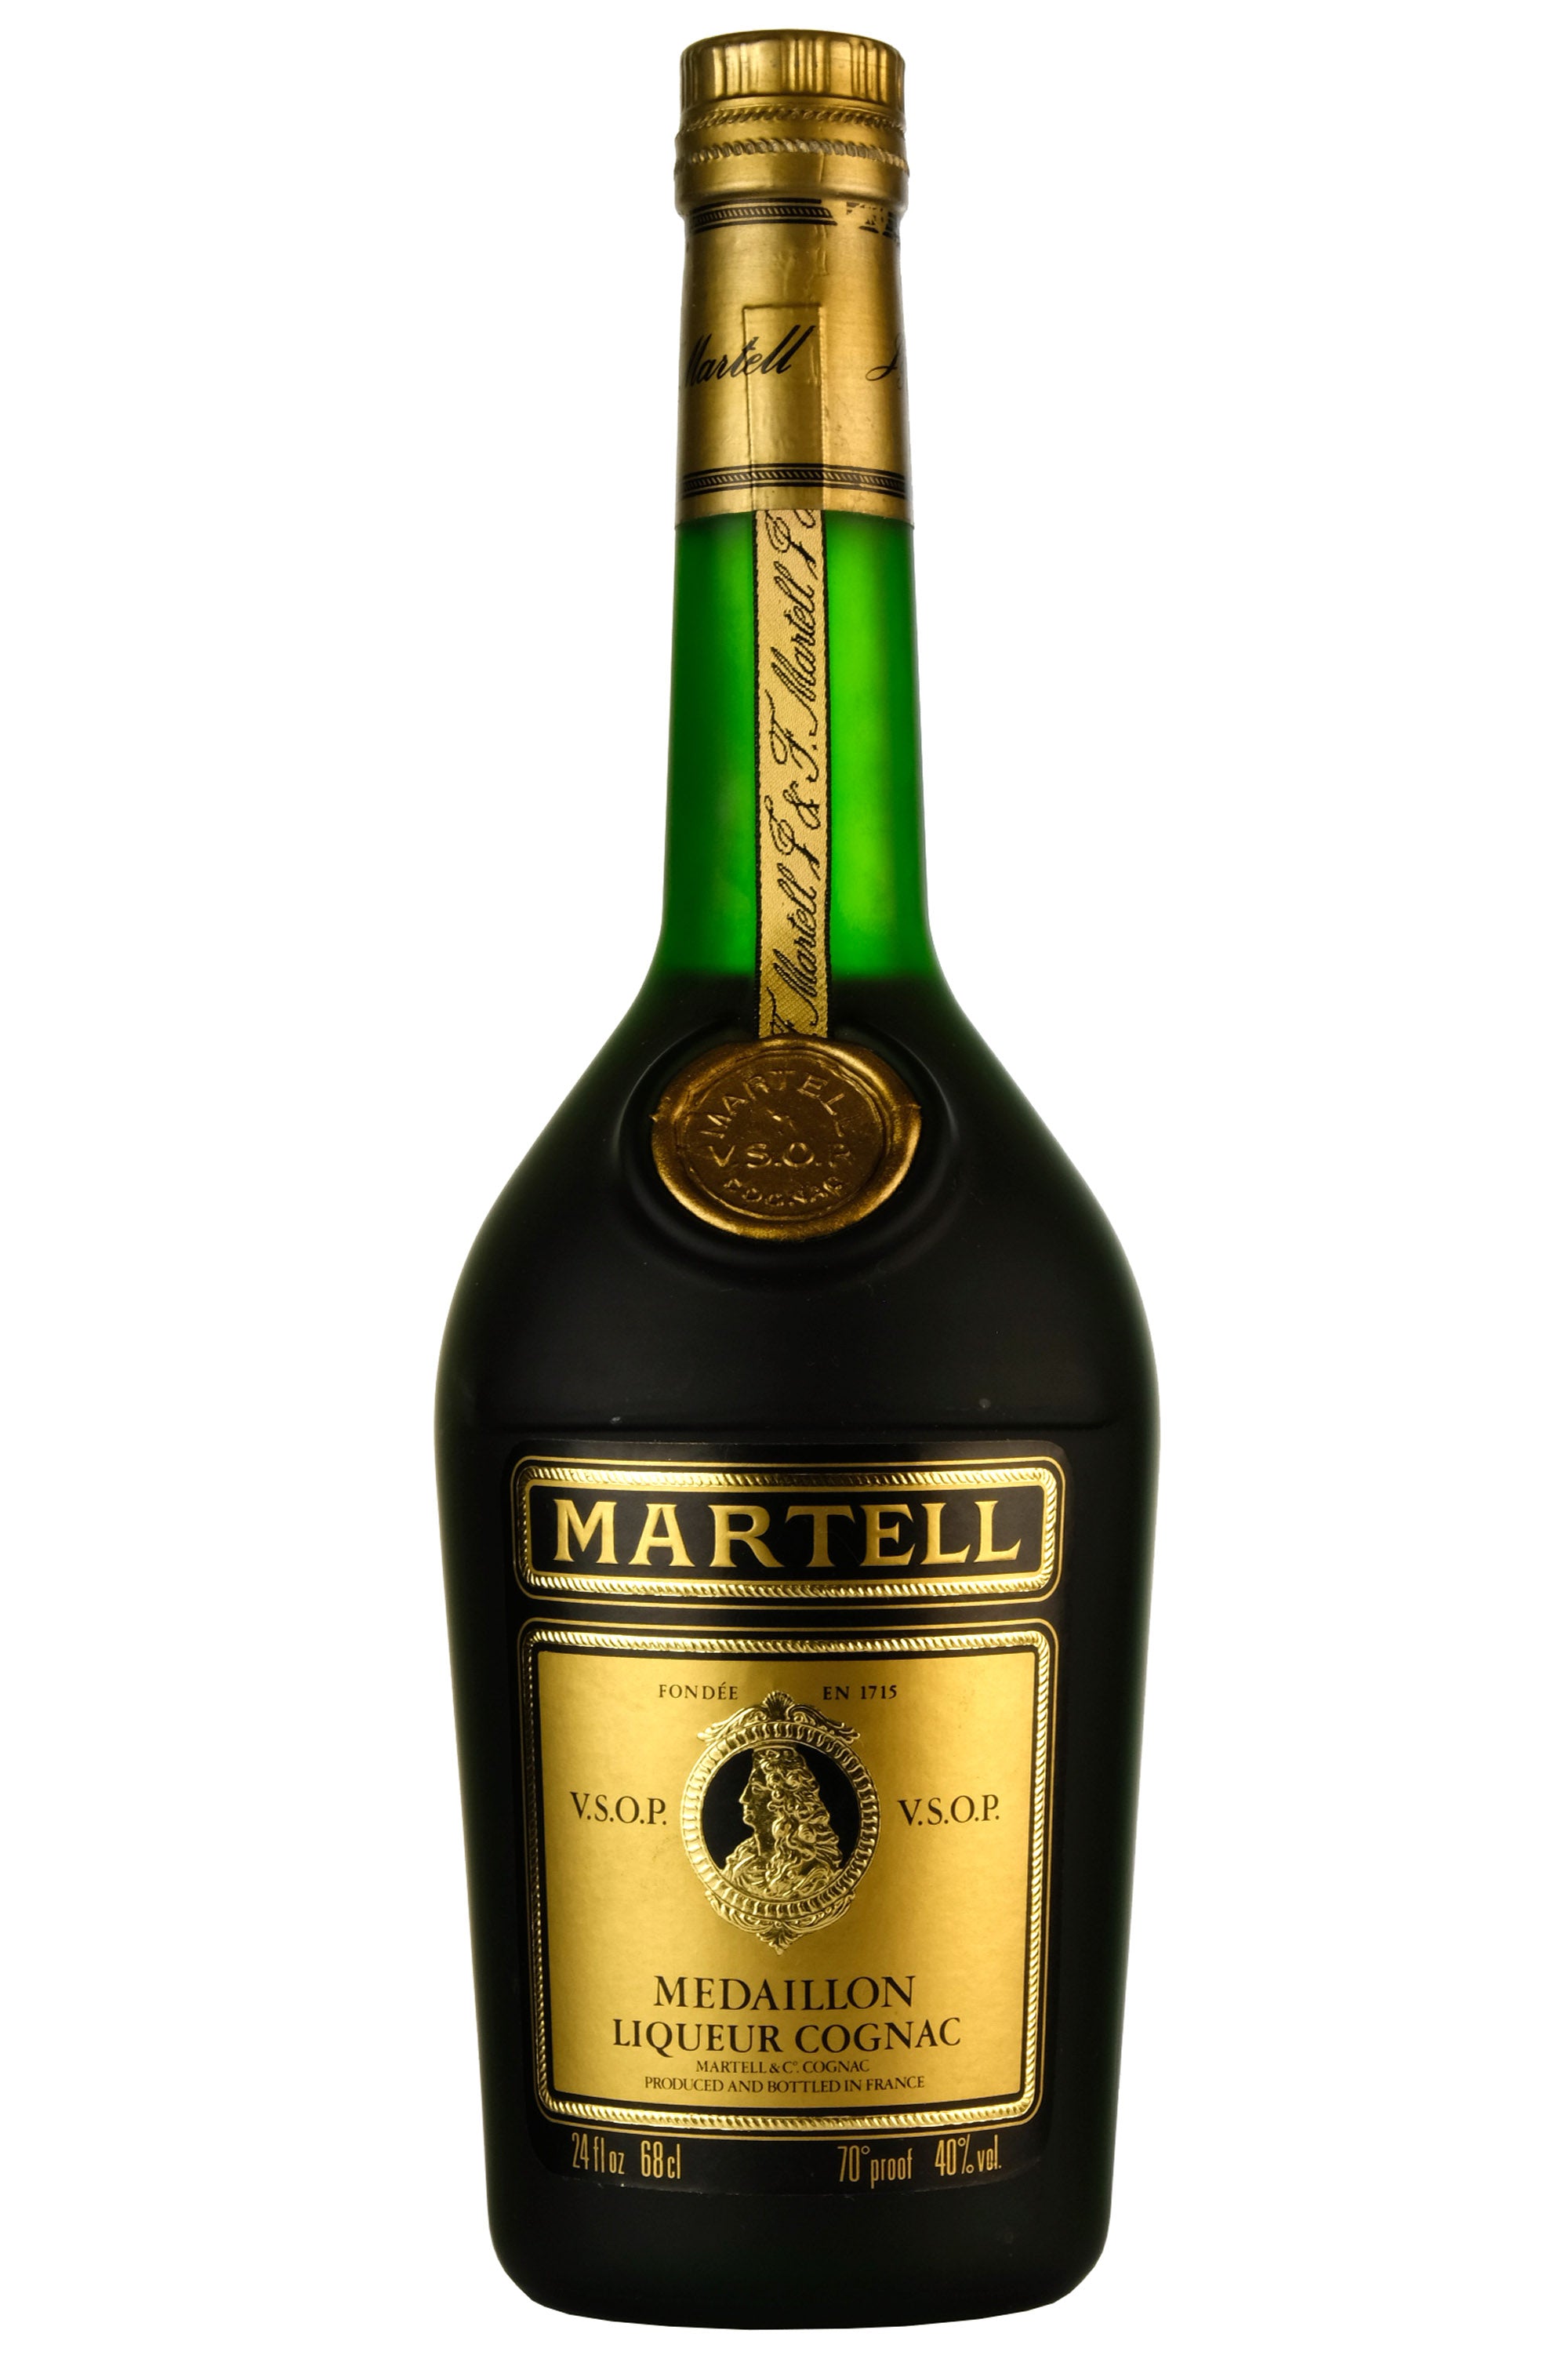 Martell Medallion Cognac 1980s